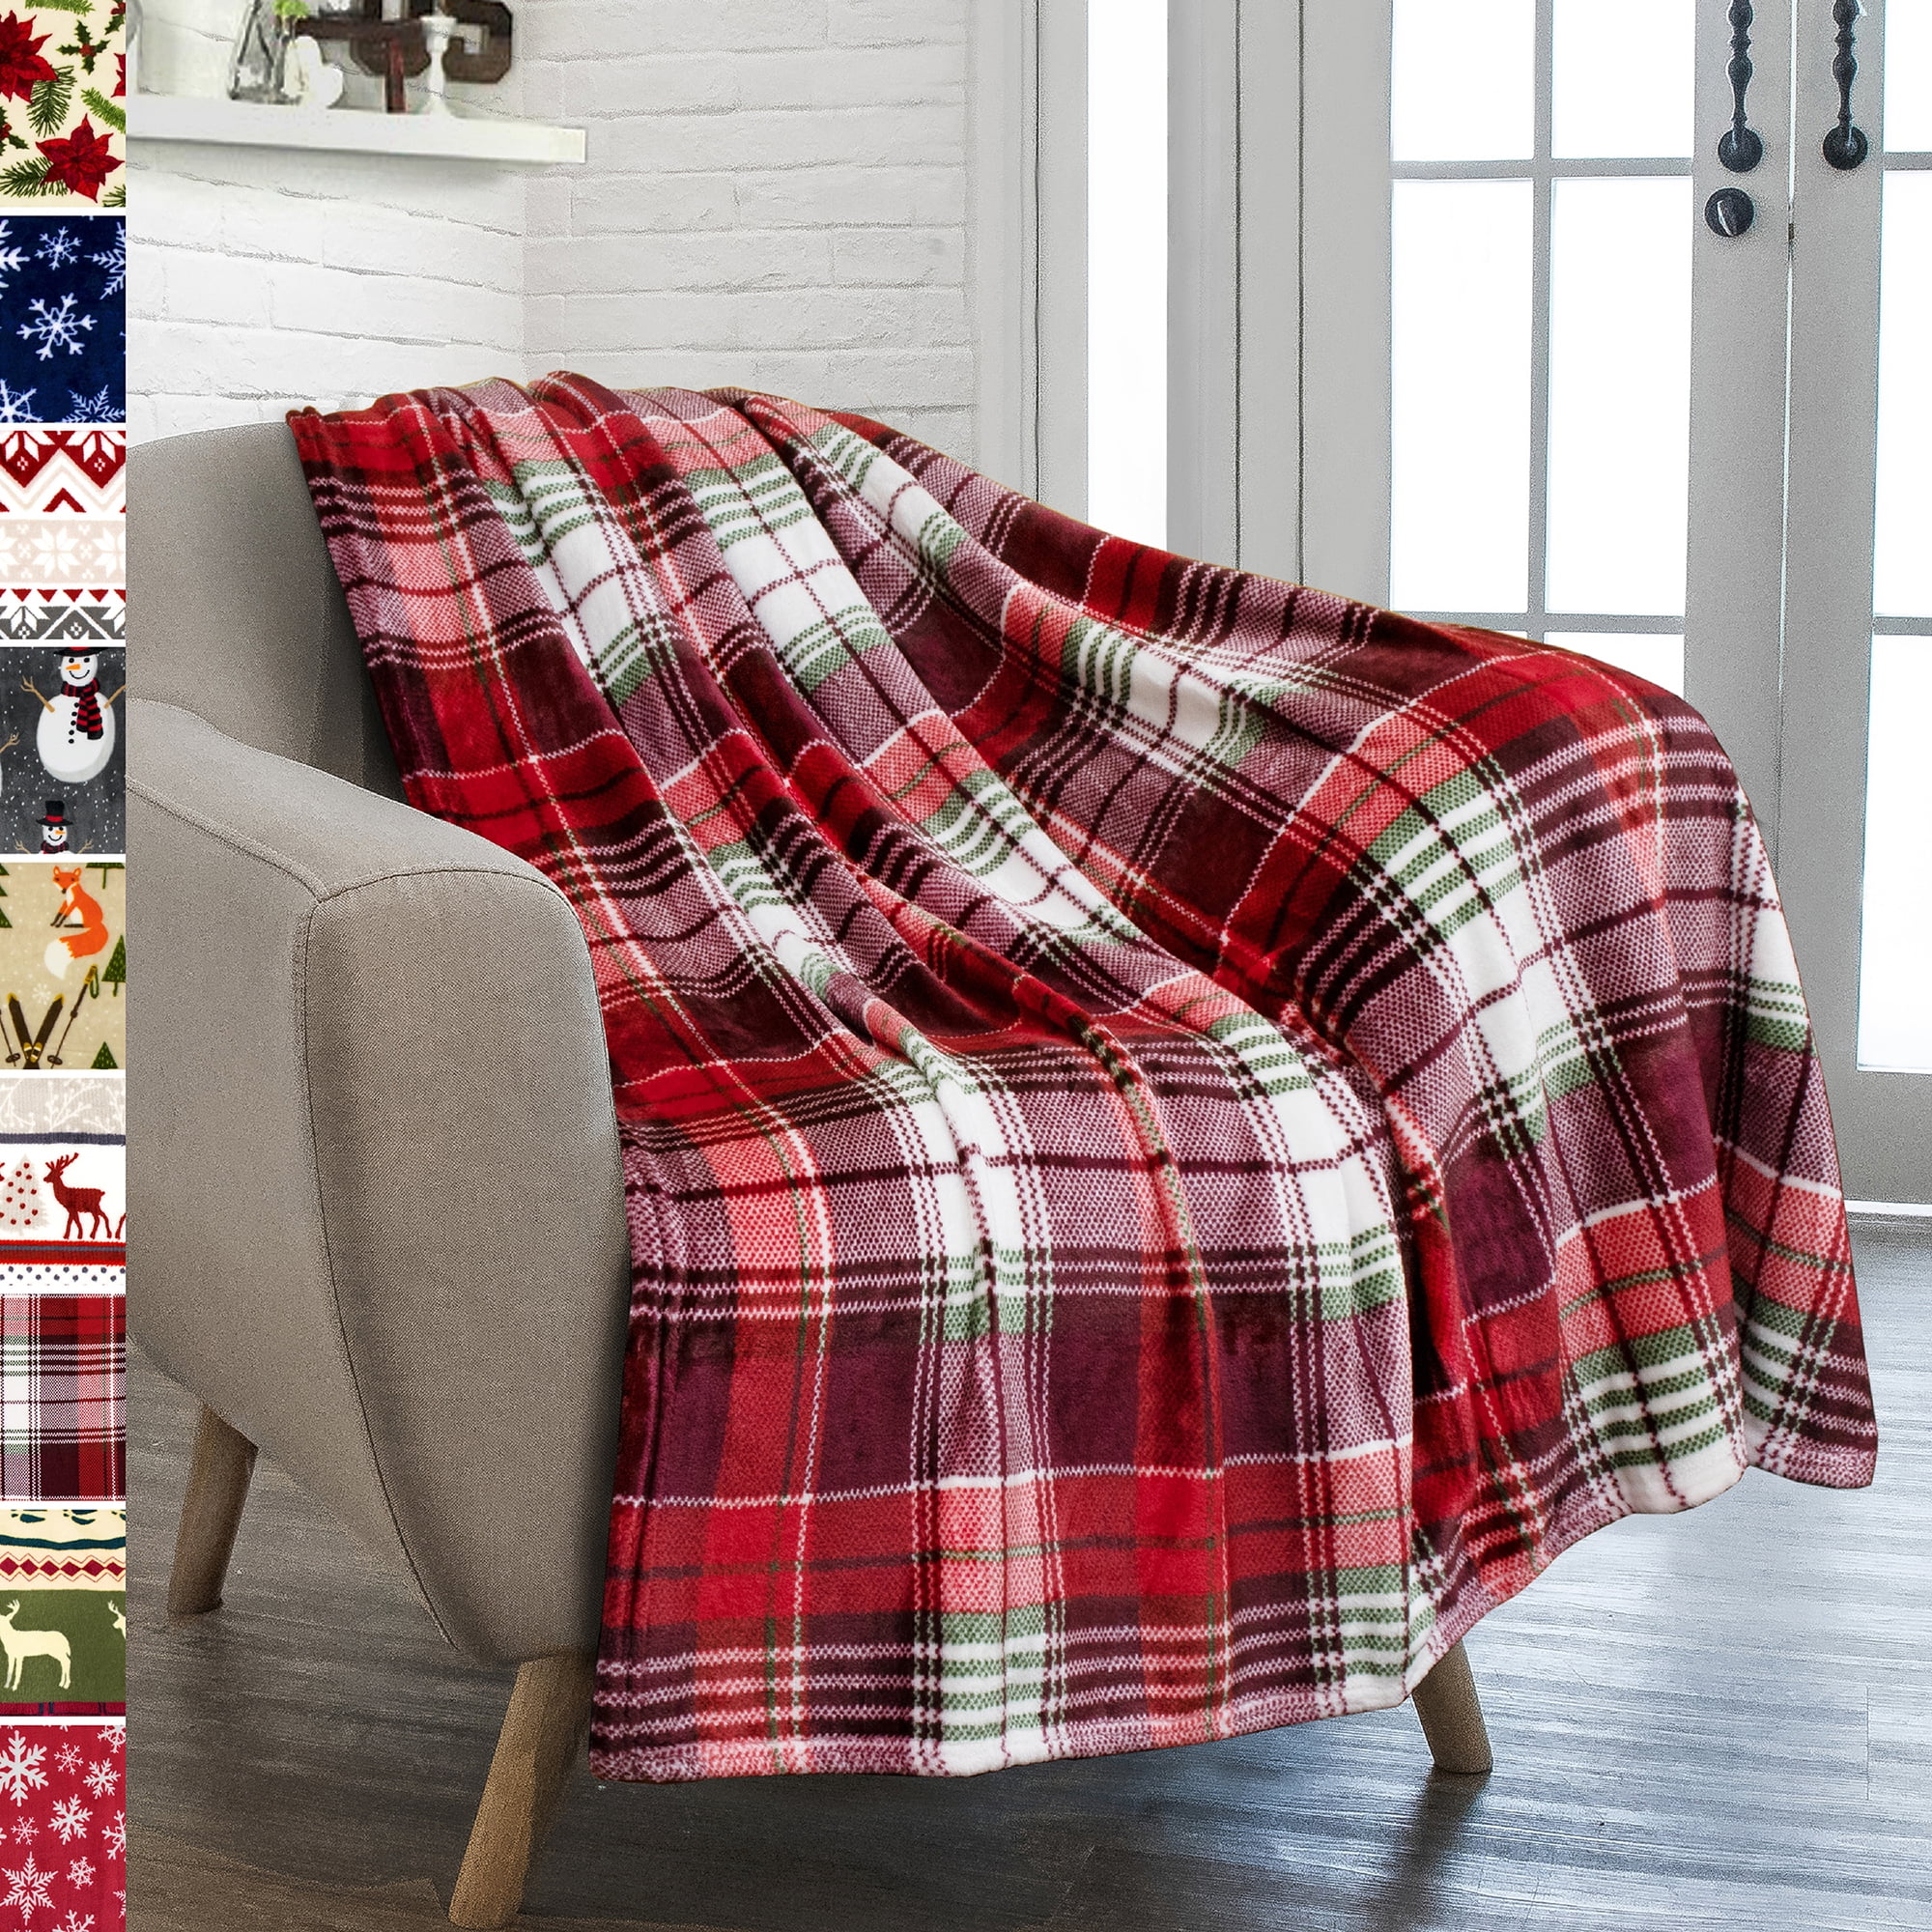 Soft Plush Warm All Season Holiday Throw Blankets Great Gift !!! 50" X 60" 